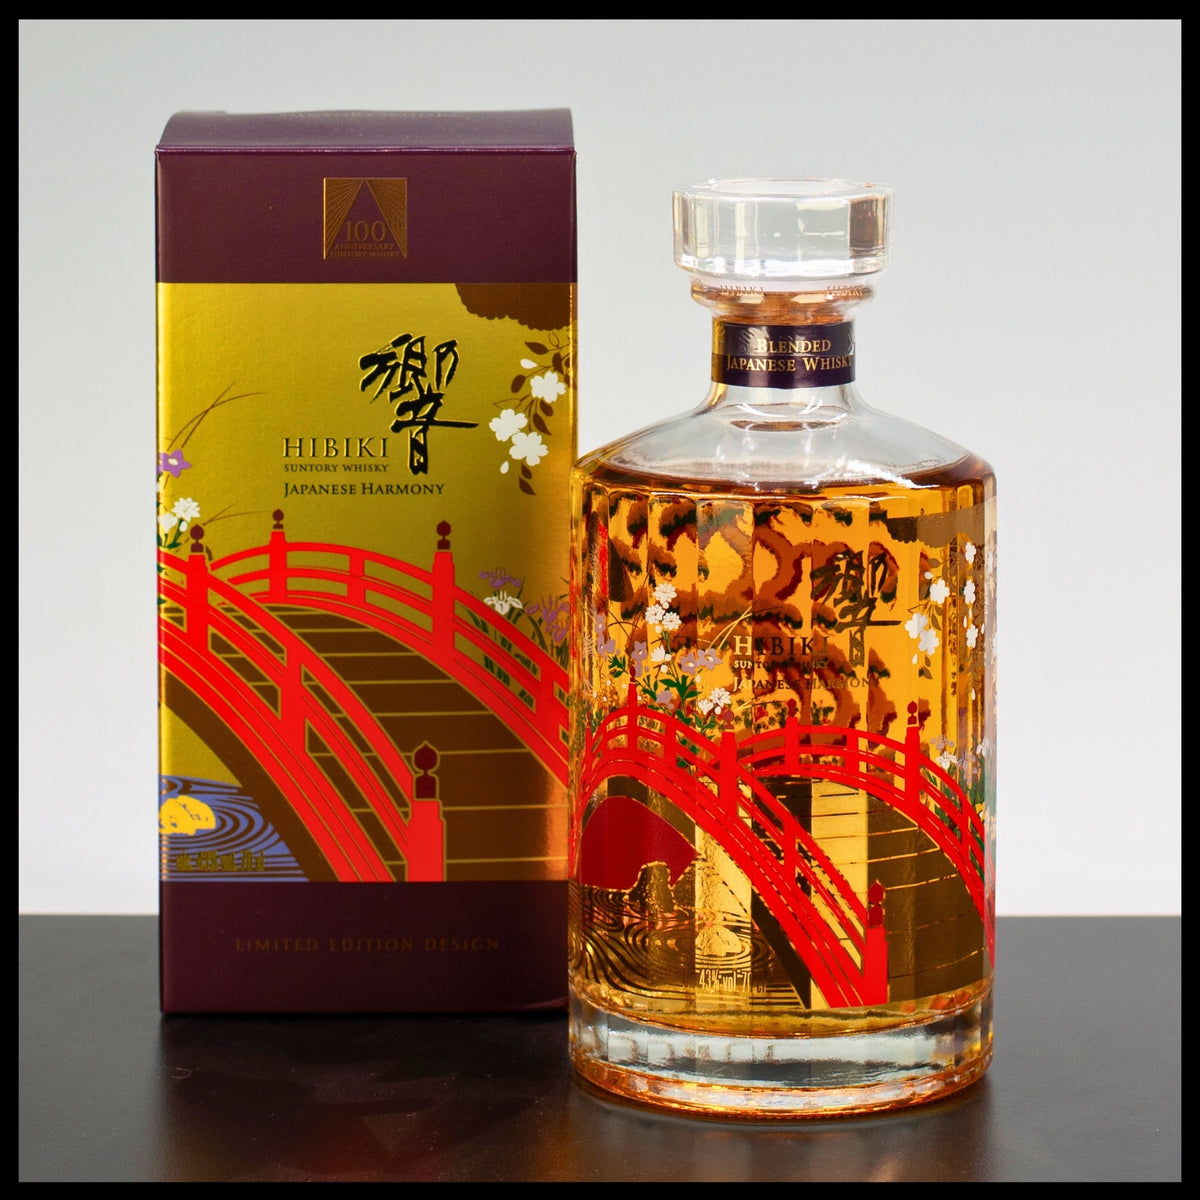 Hibiki Japanese Harmony 100th Anniversary Limited Edition Whisky 0,7L - 43% Vol.